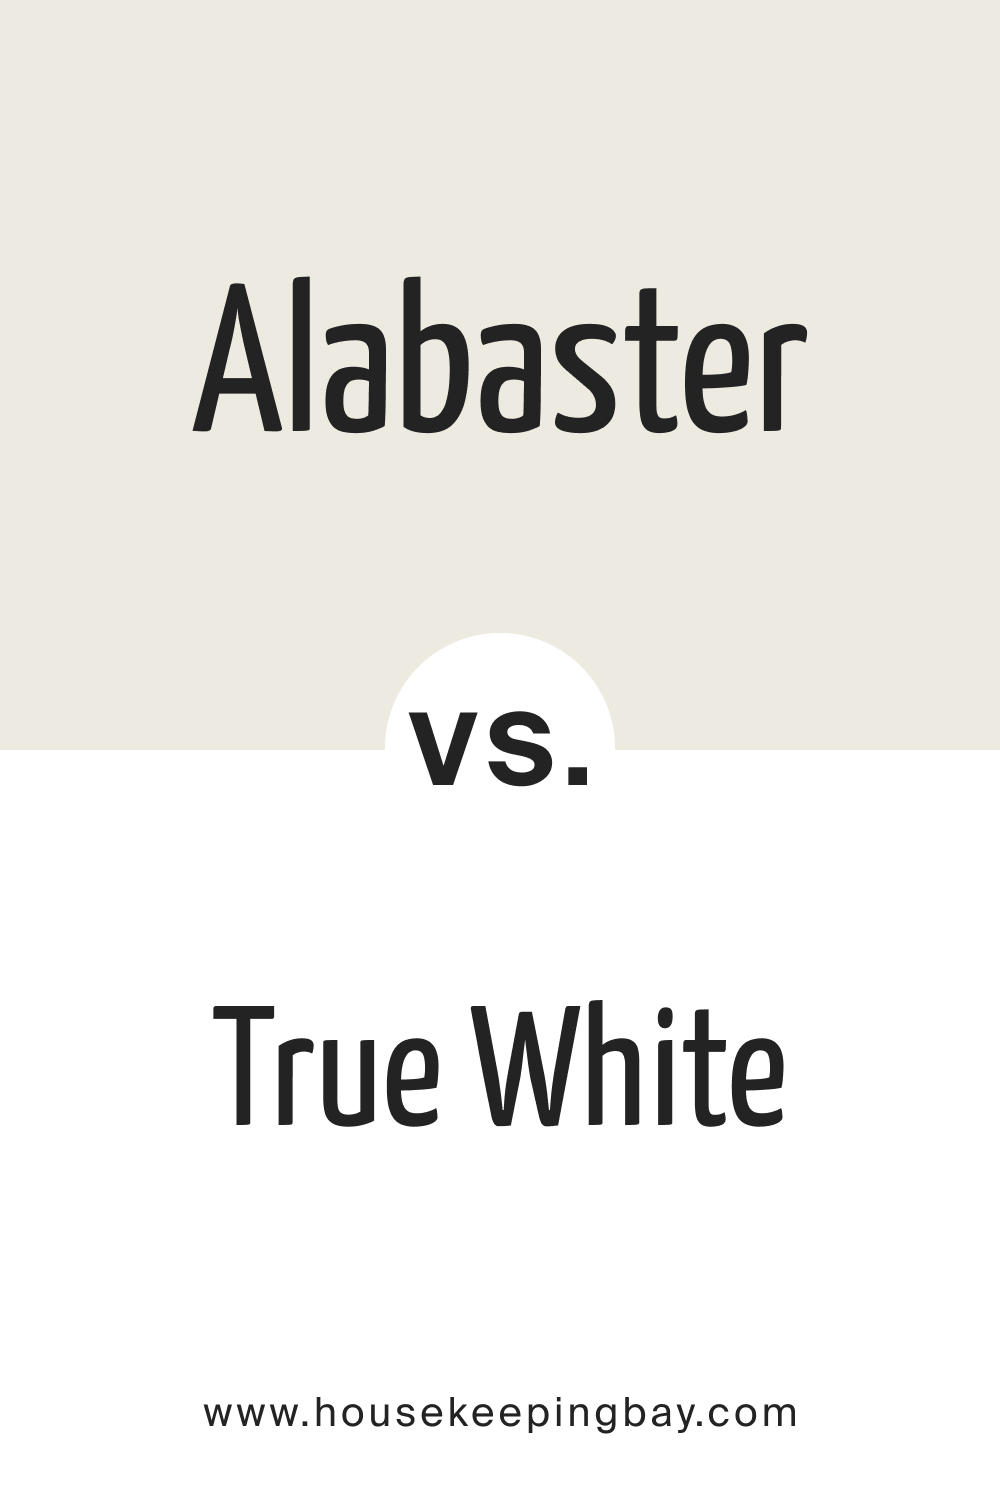 Alabaster vs. True White